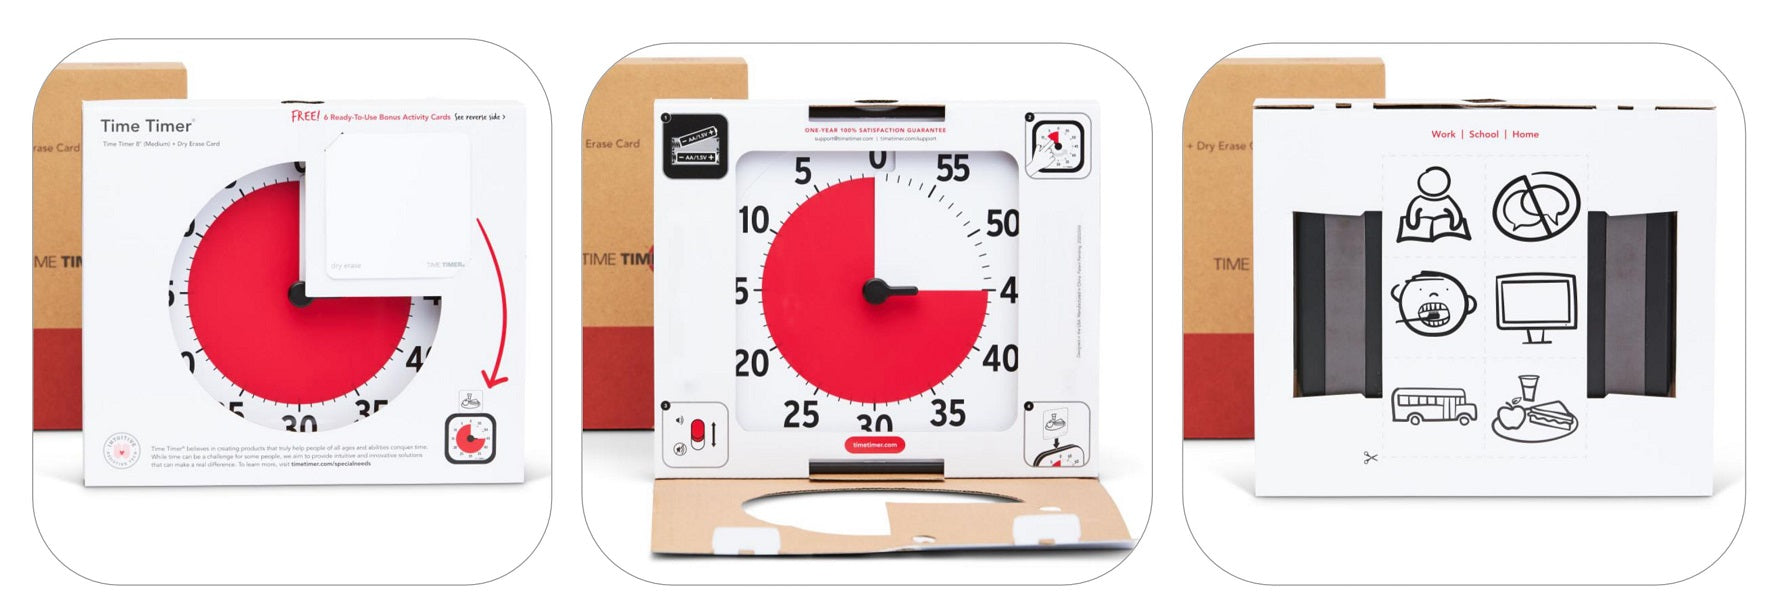 Time Timer Original - Medium (8 inch) Includes 1 Dry Erase Activity Card